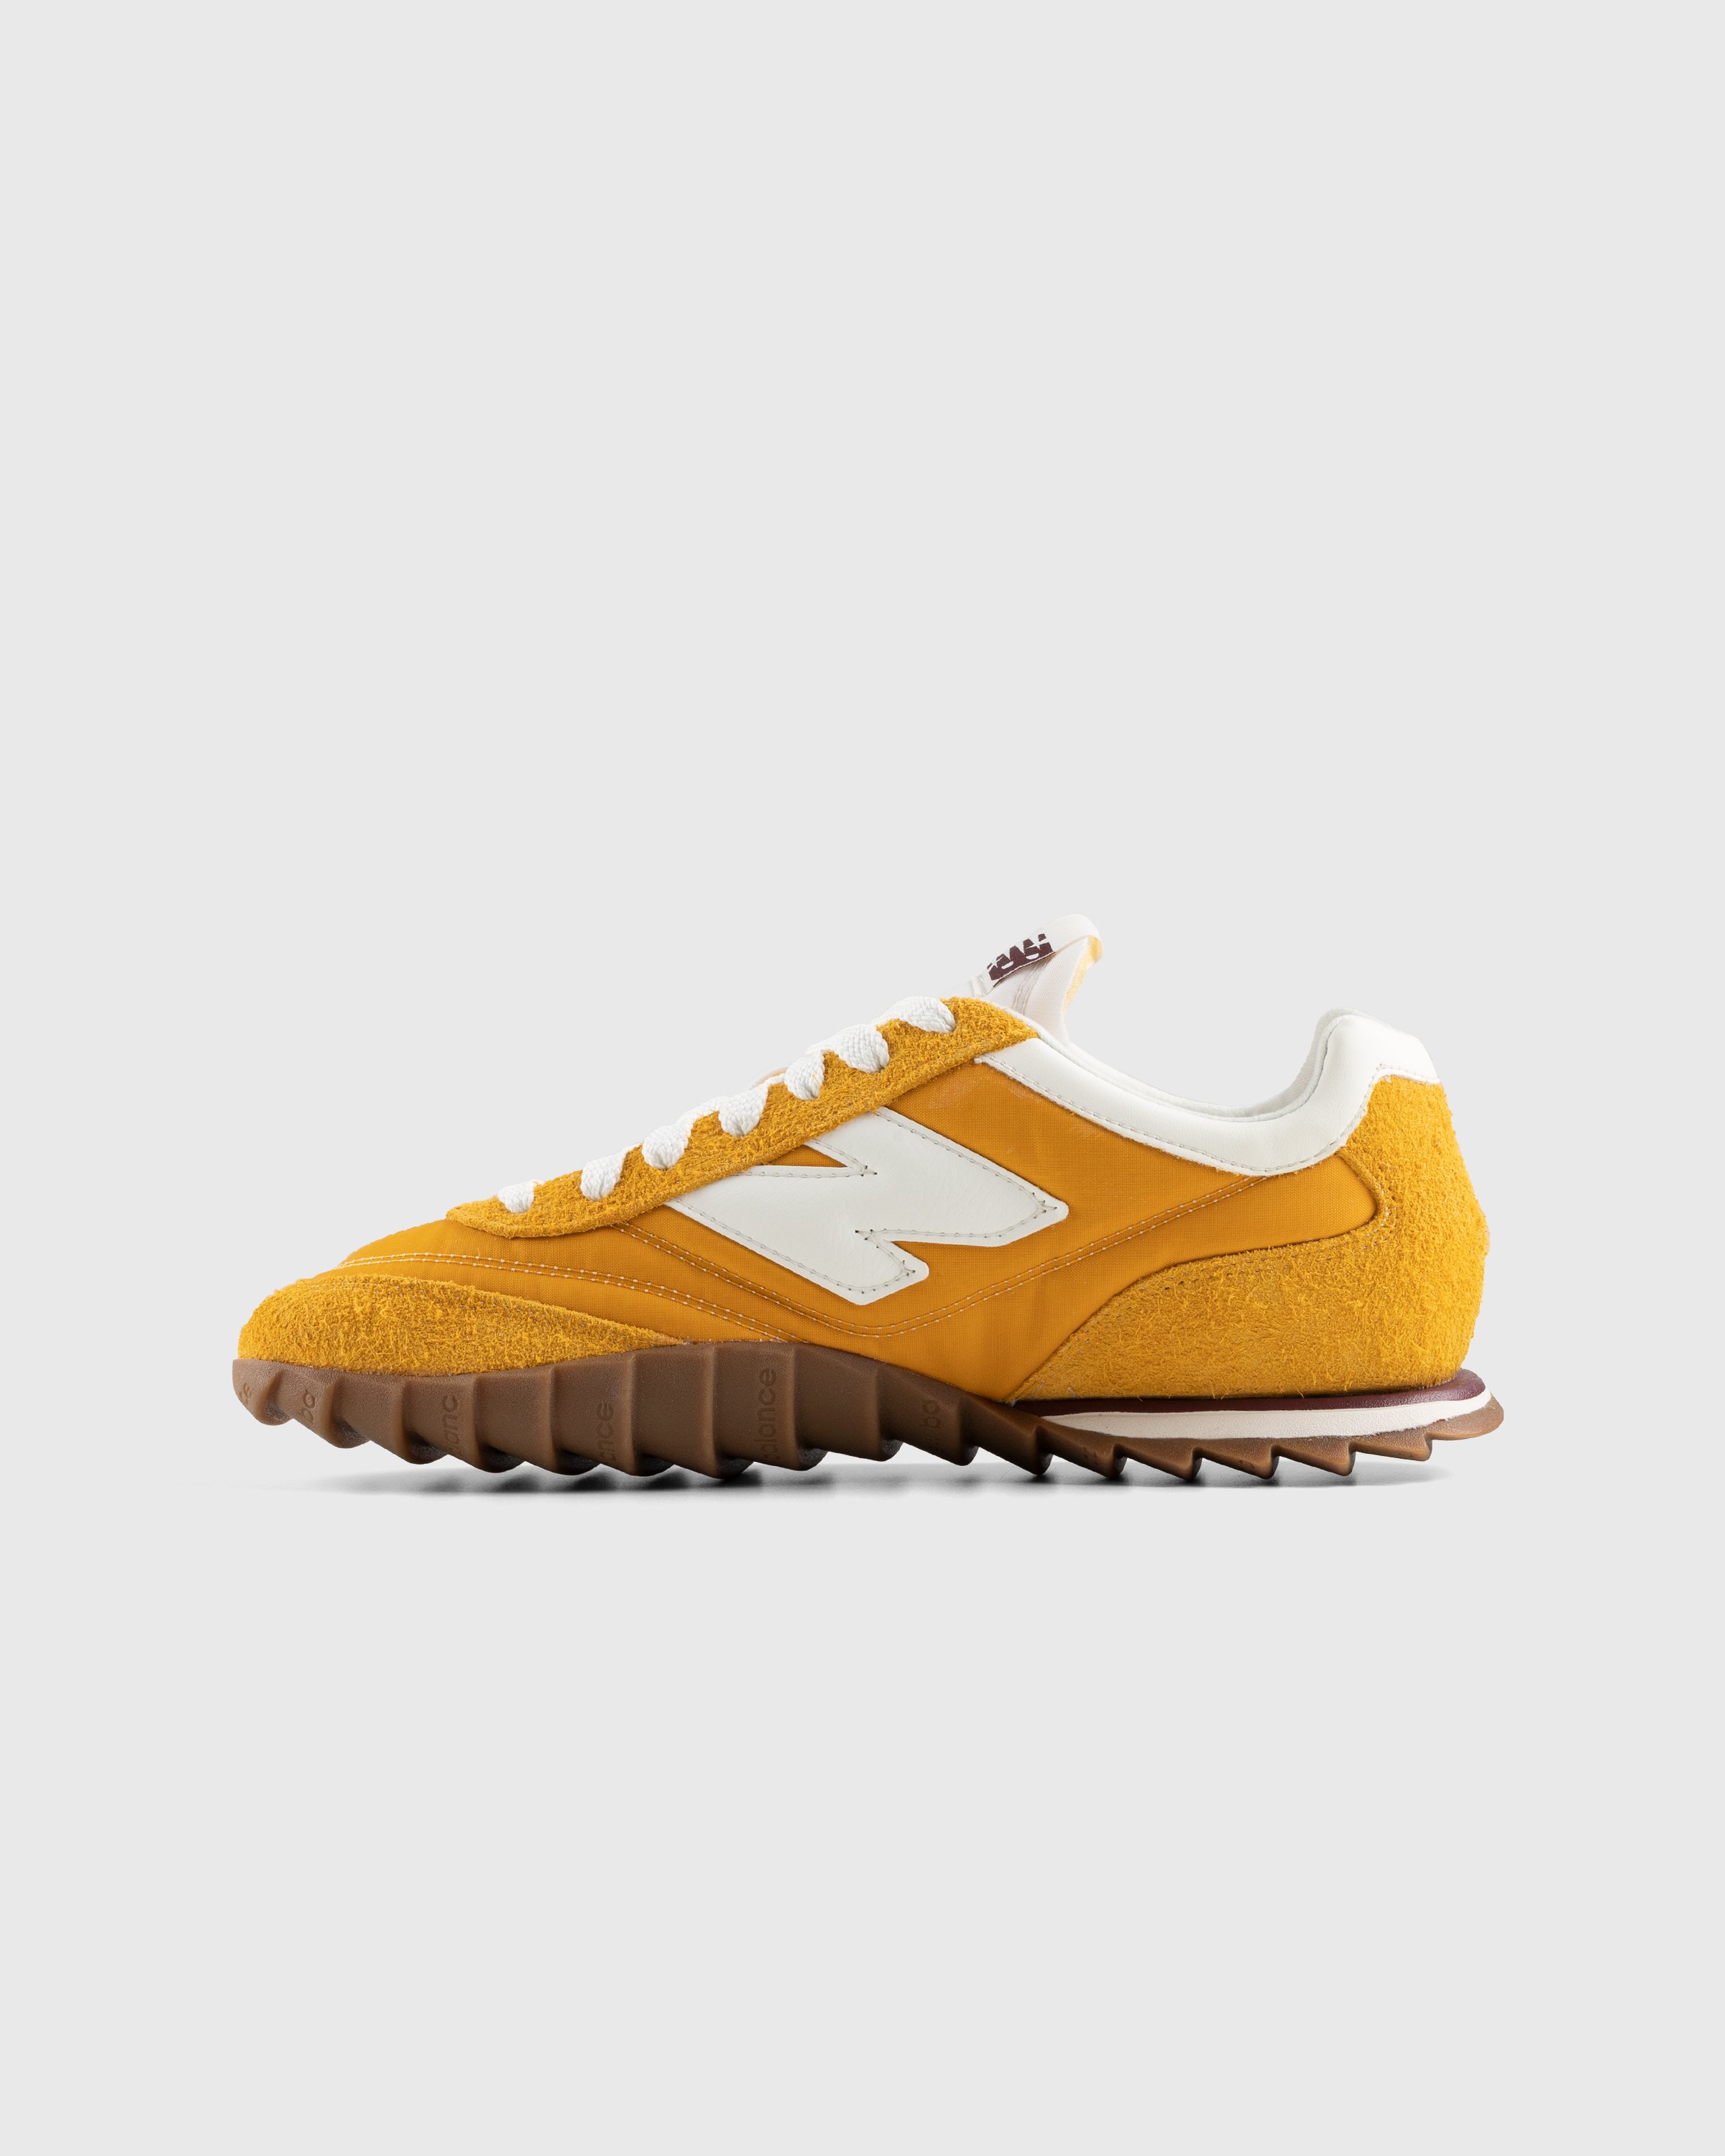 Donald Glover x New Balance - URC30GG Golden Hour - Footwear - Orange - Image 2